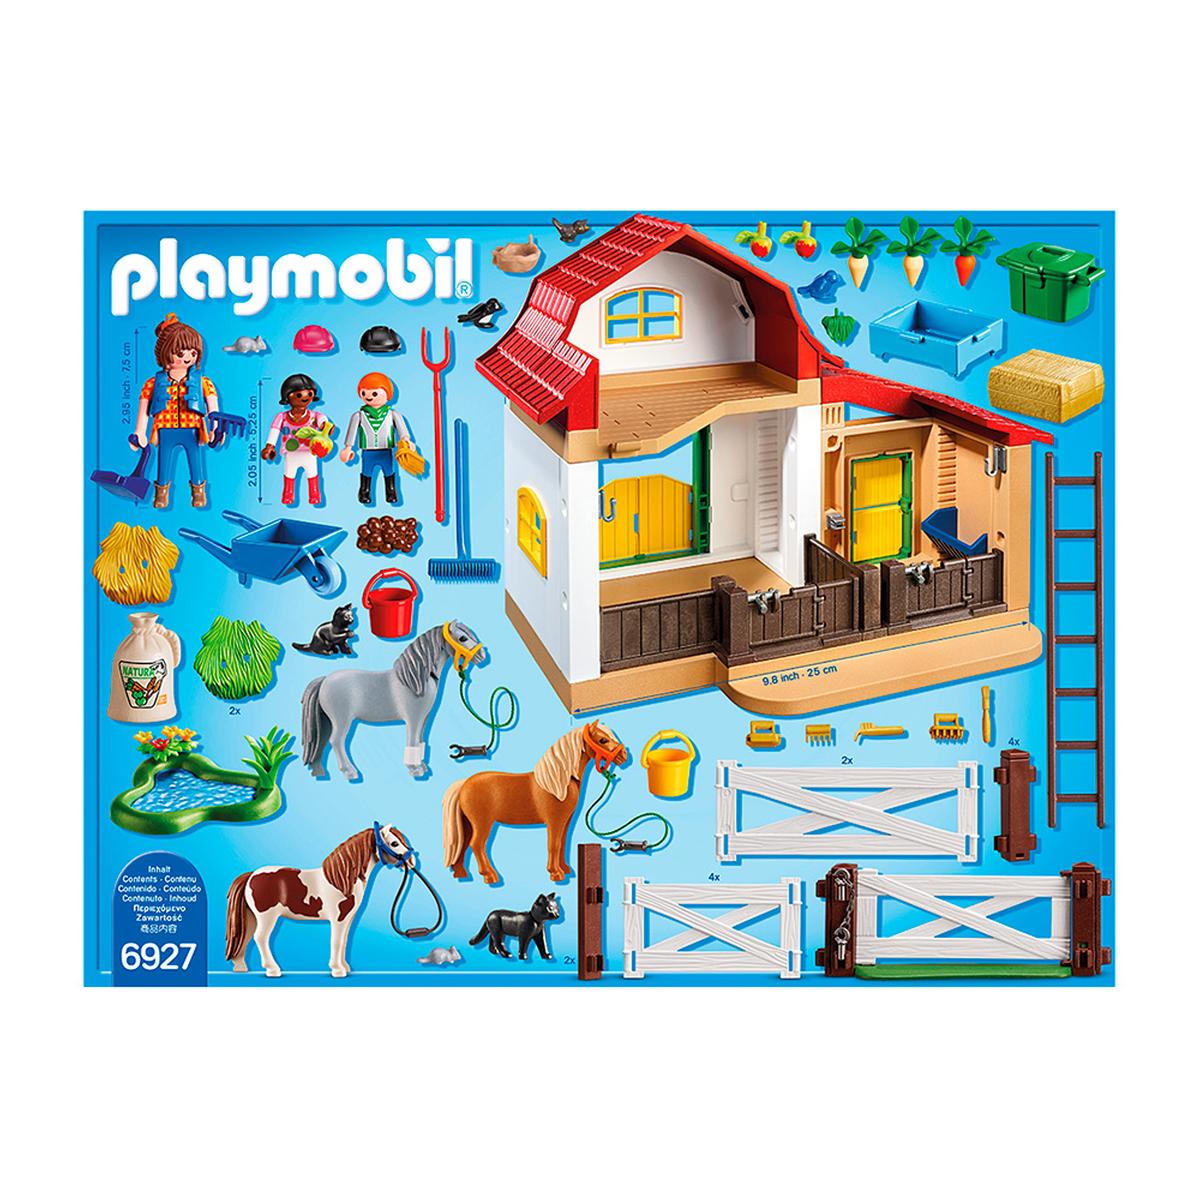 PLAYMOBIL 6927 - Country - Pony Farm - Playpolis